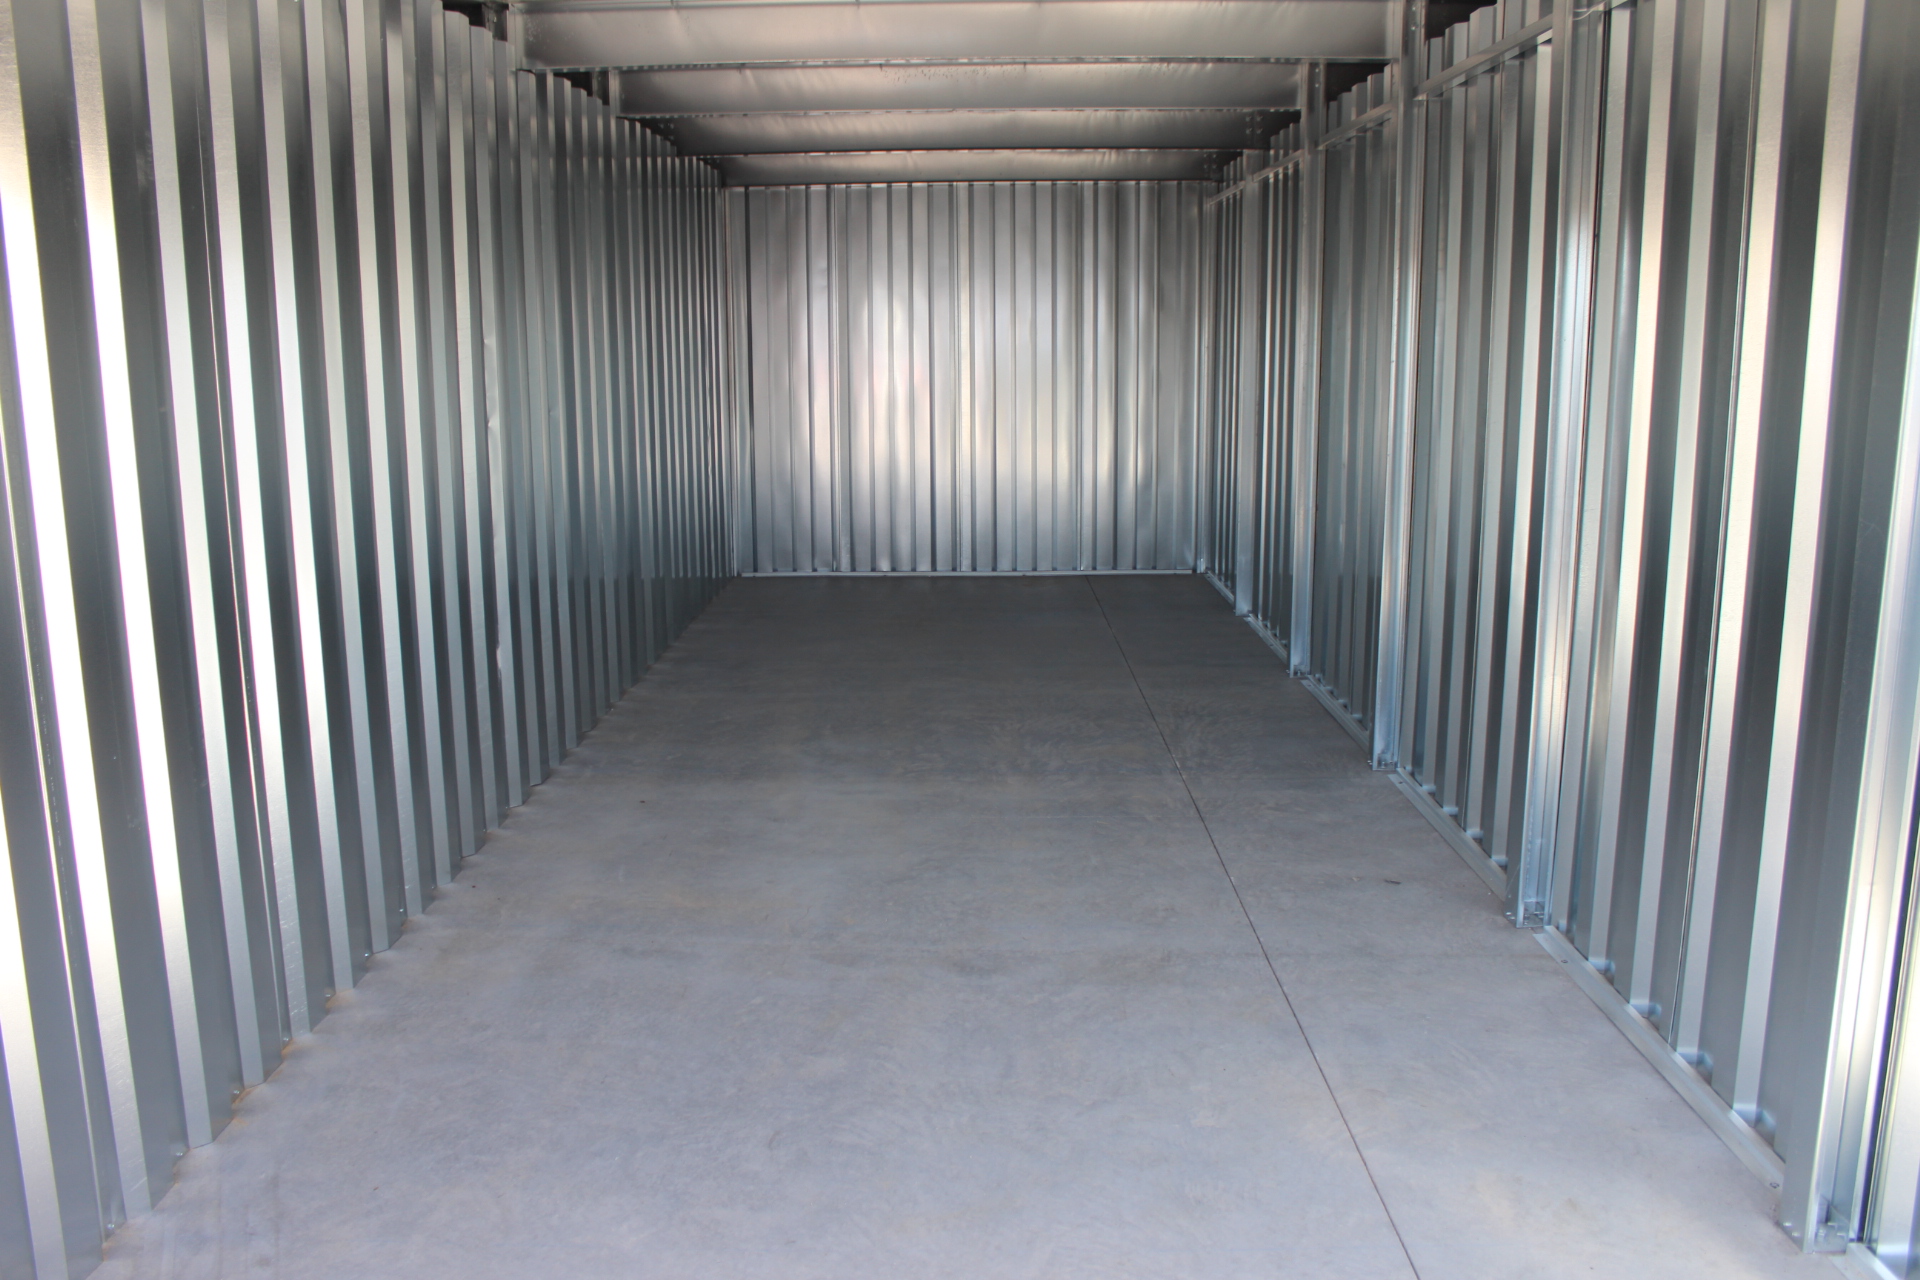 Inside view of storage unit